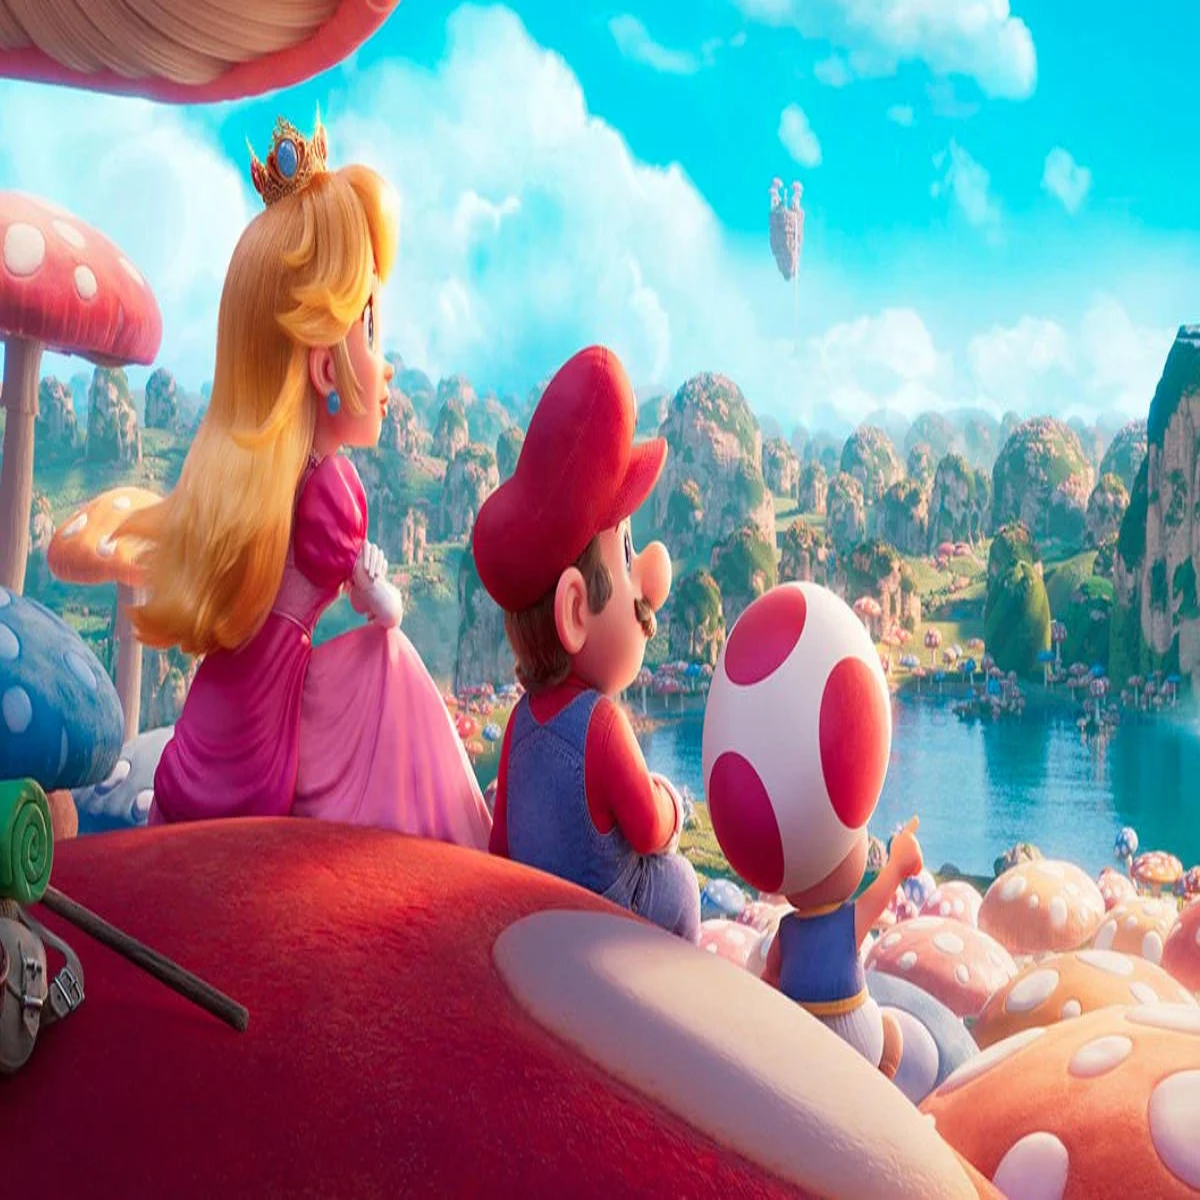 Super Mario Bros. Movie': Shigeru Miyamoto on Nintendo in Hollywood